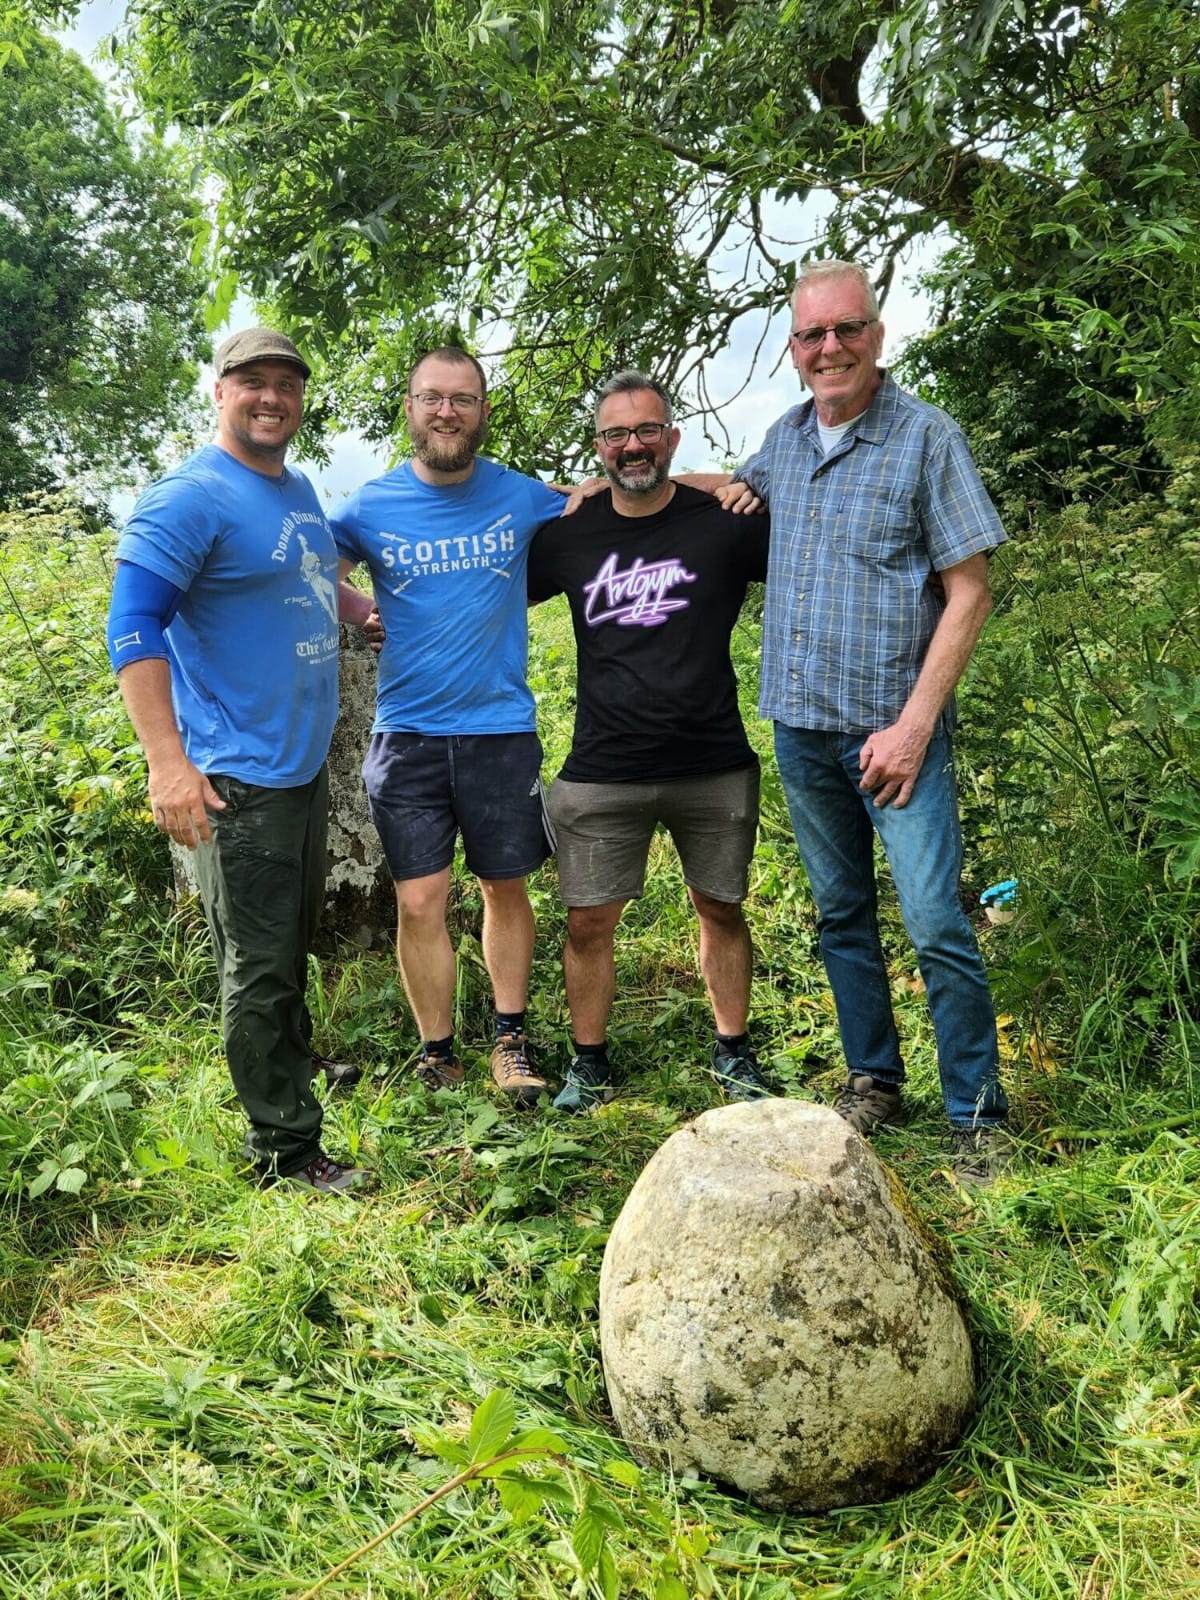 A group of men stand around an Irish lifting stone.